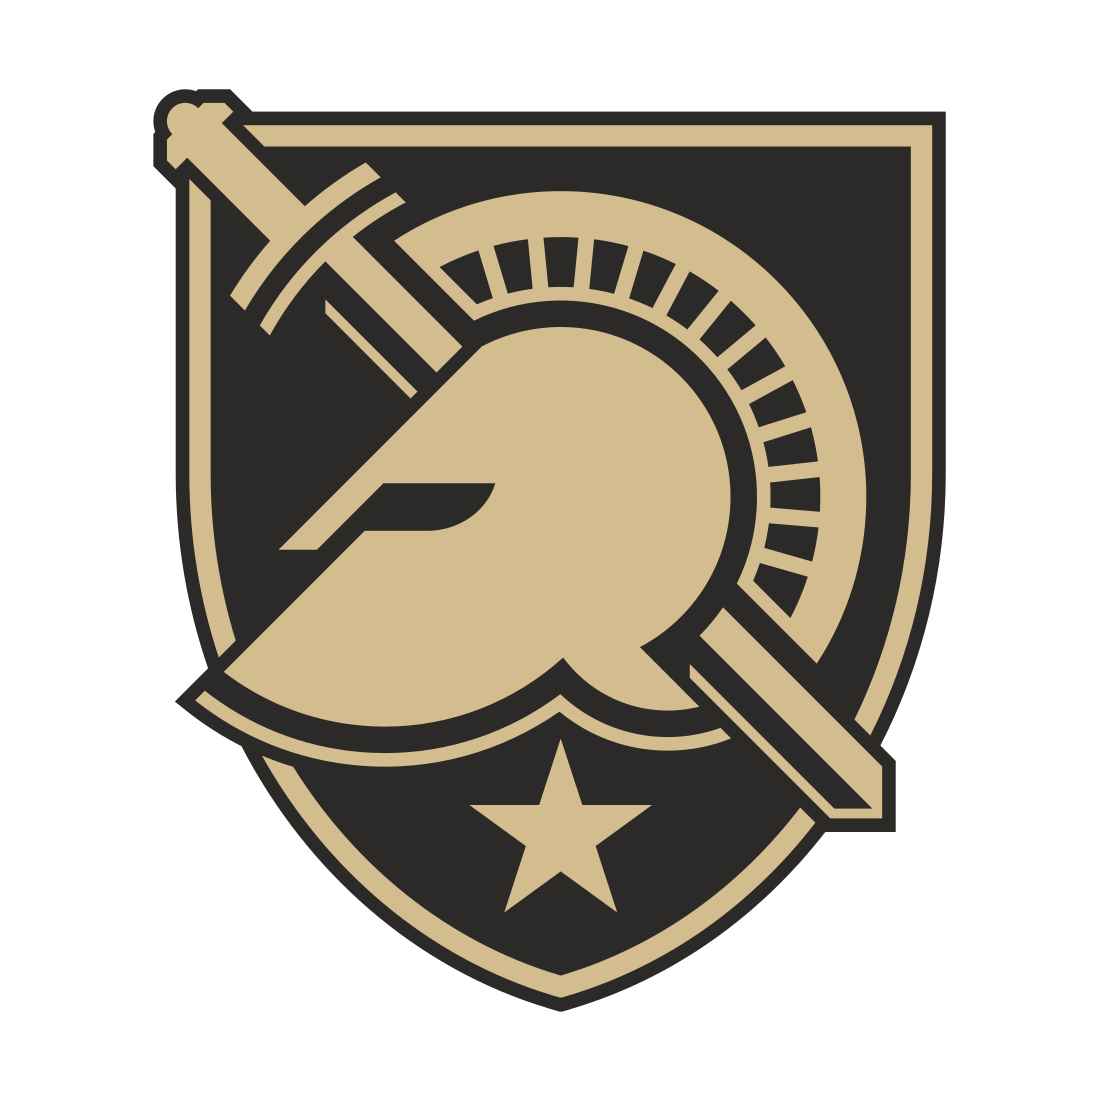 Army West Point Black Knights logo